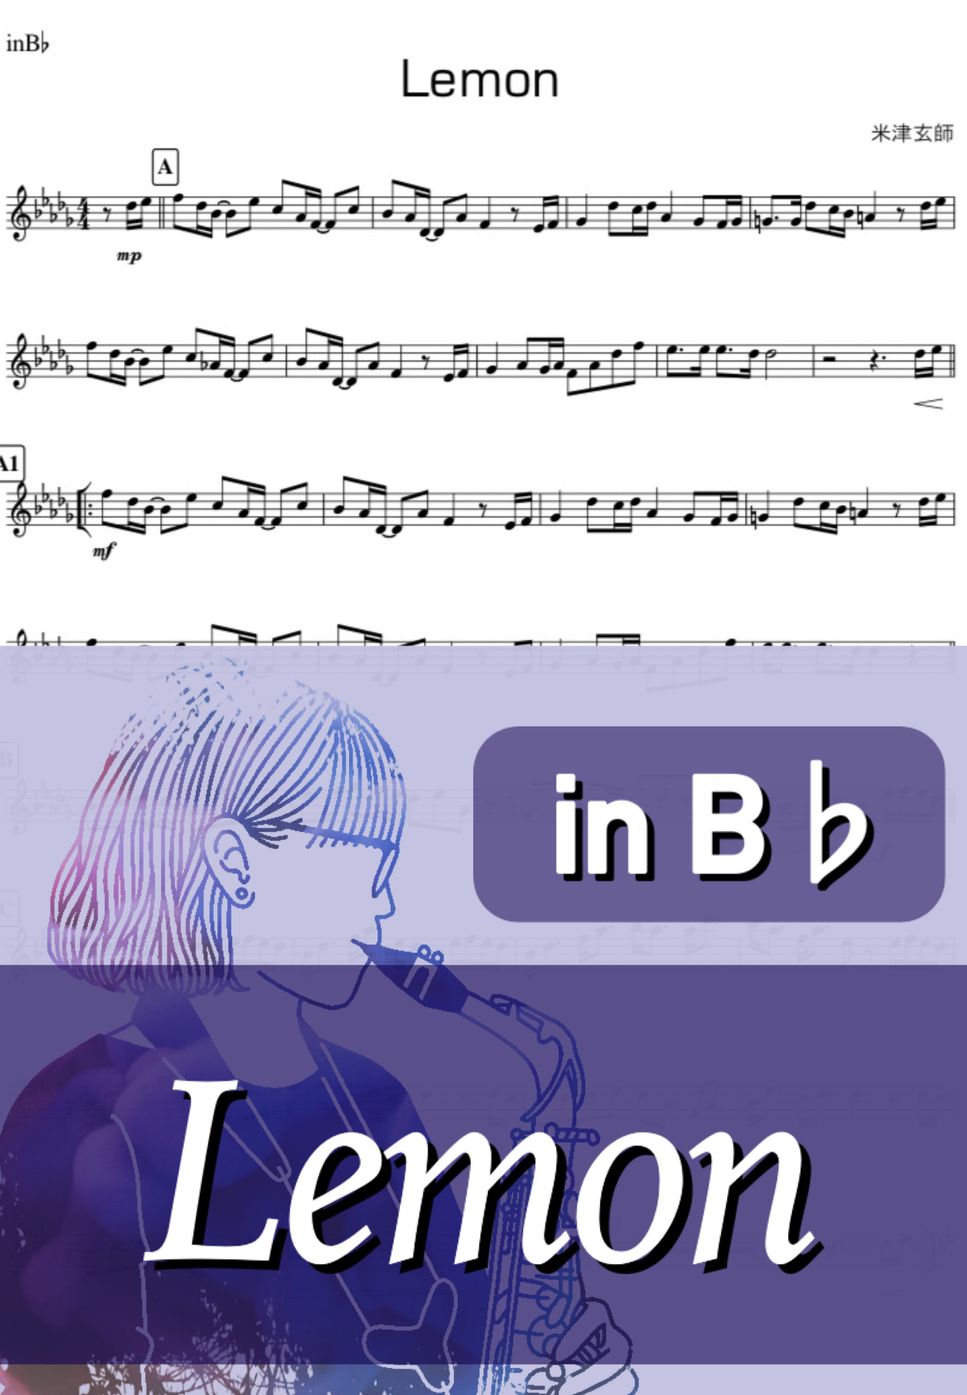 米津玄師 - Lemon (B♭) by kanamusic